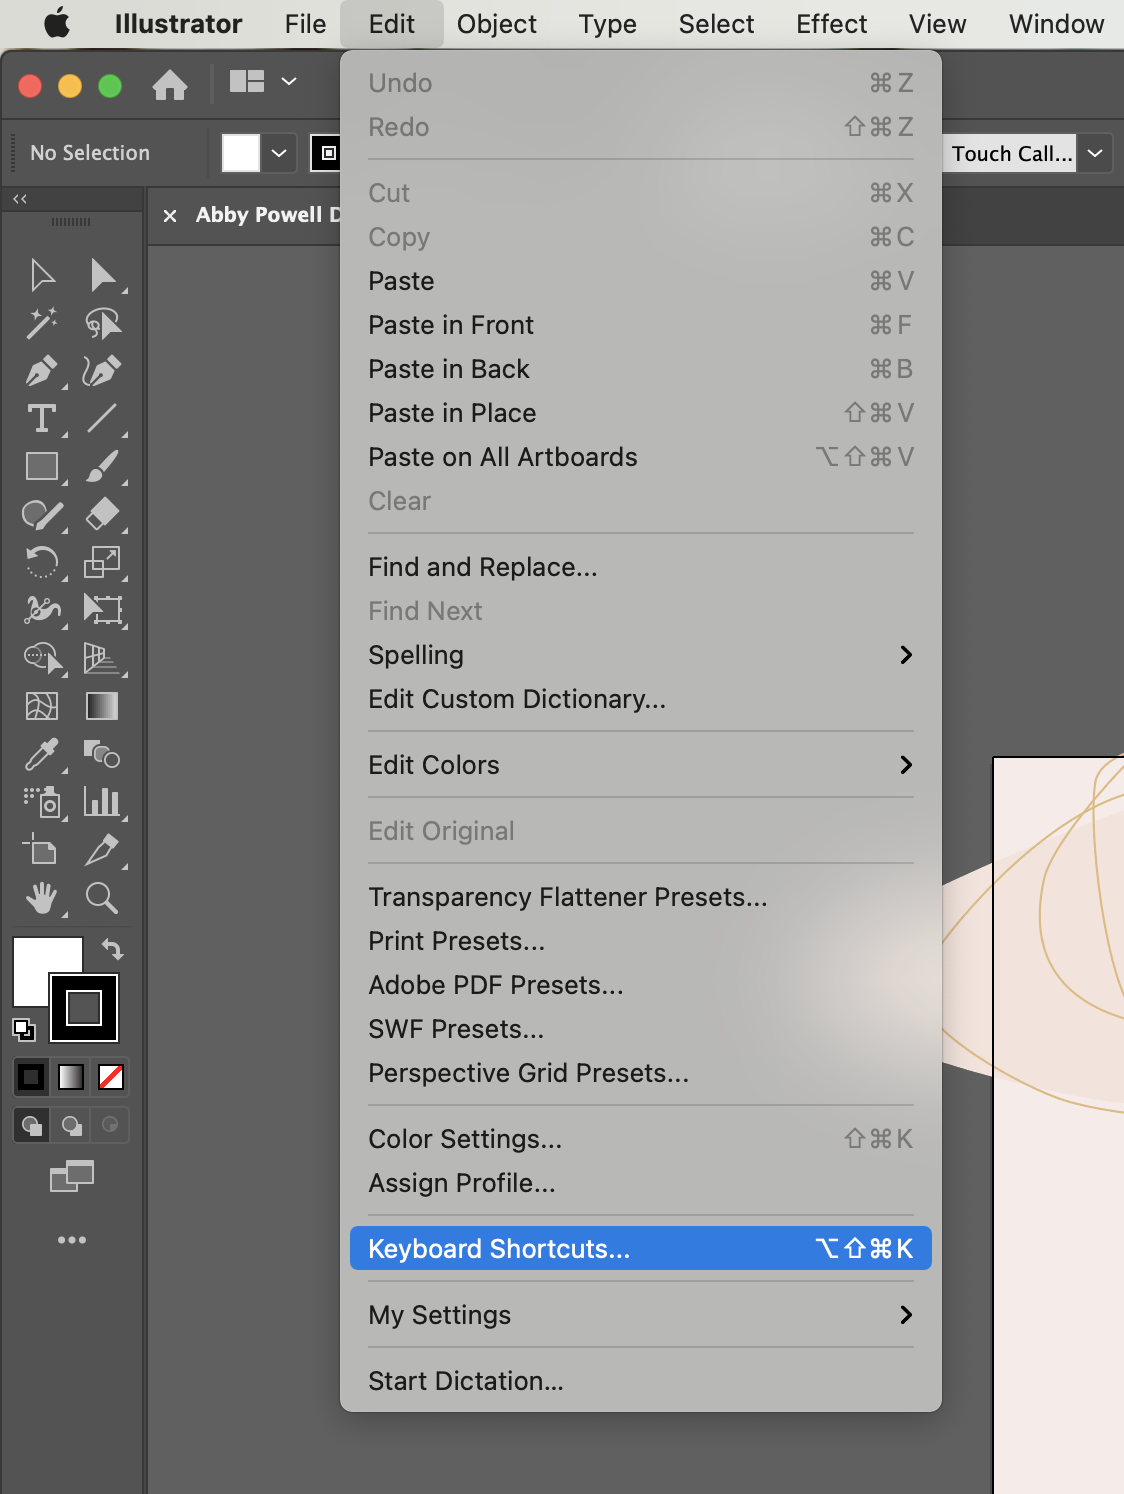 Find keyboard shortcuts in Adobe Illustrator